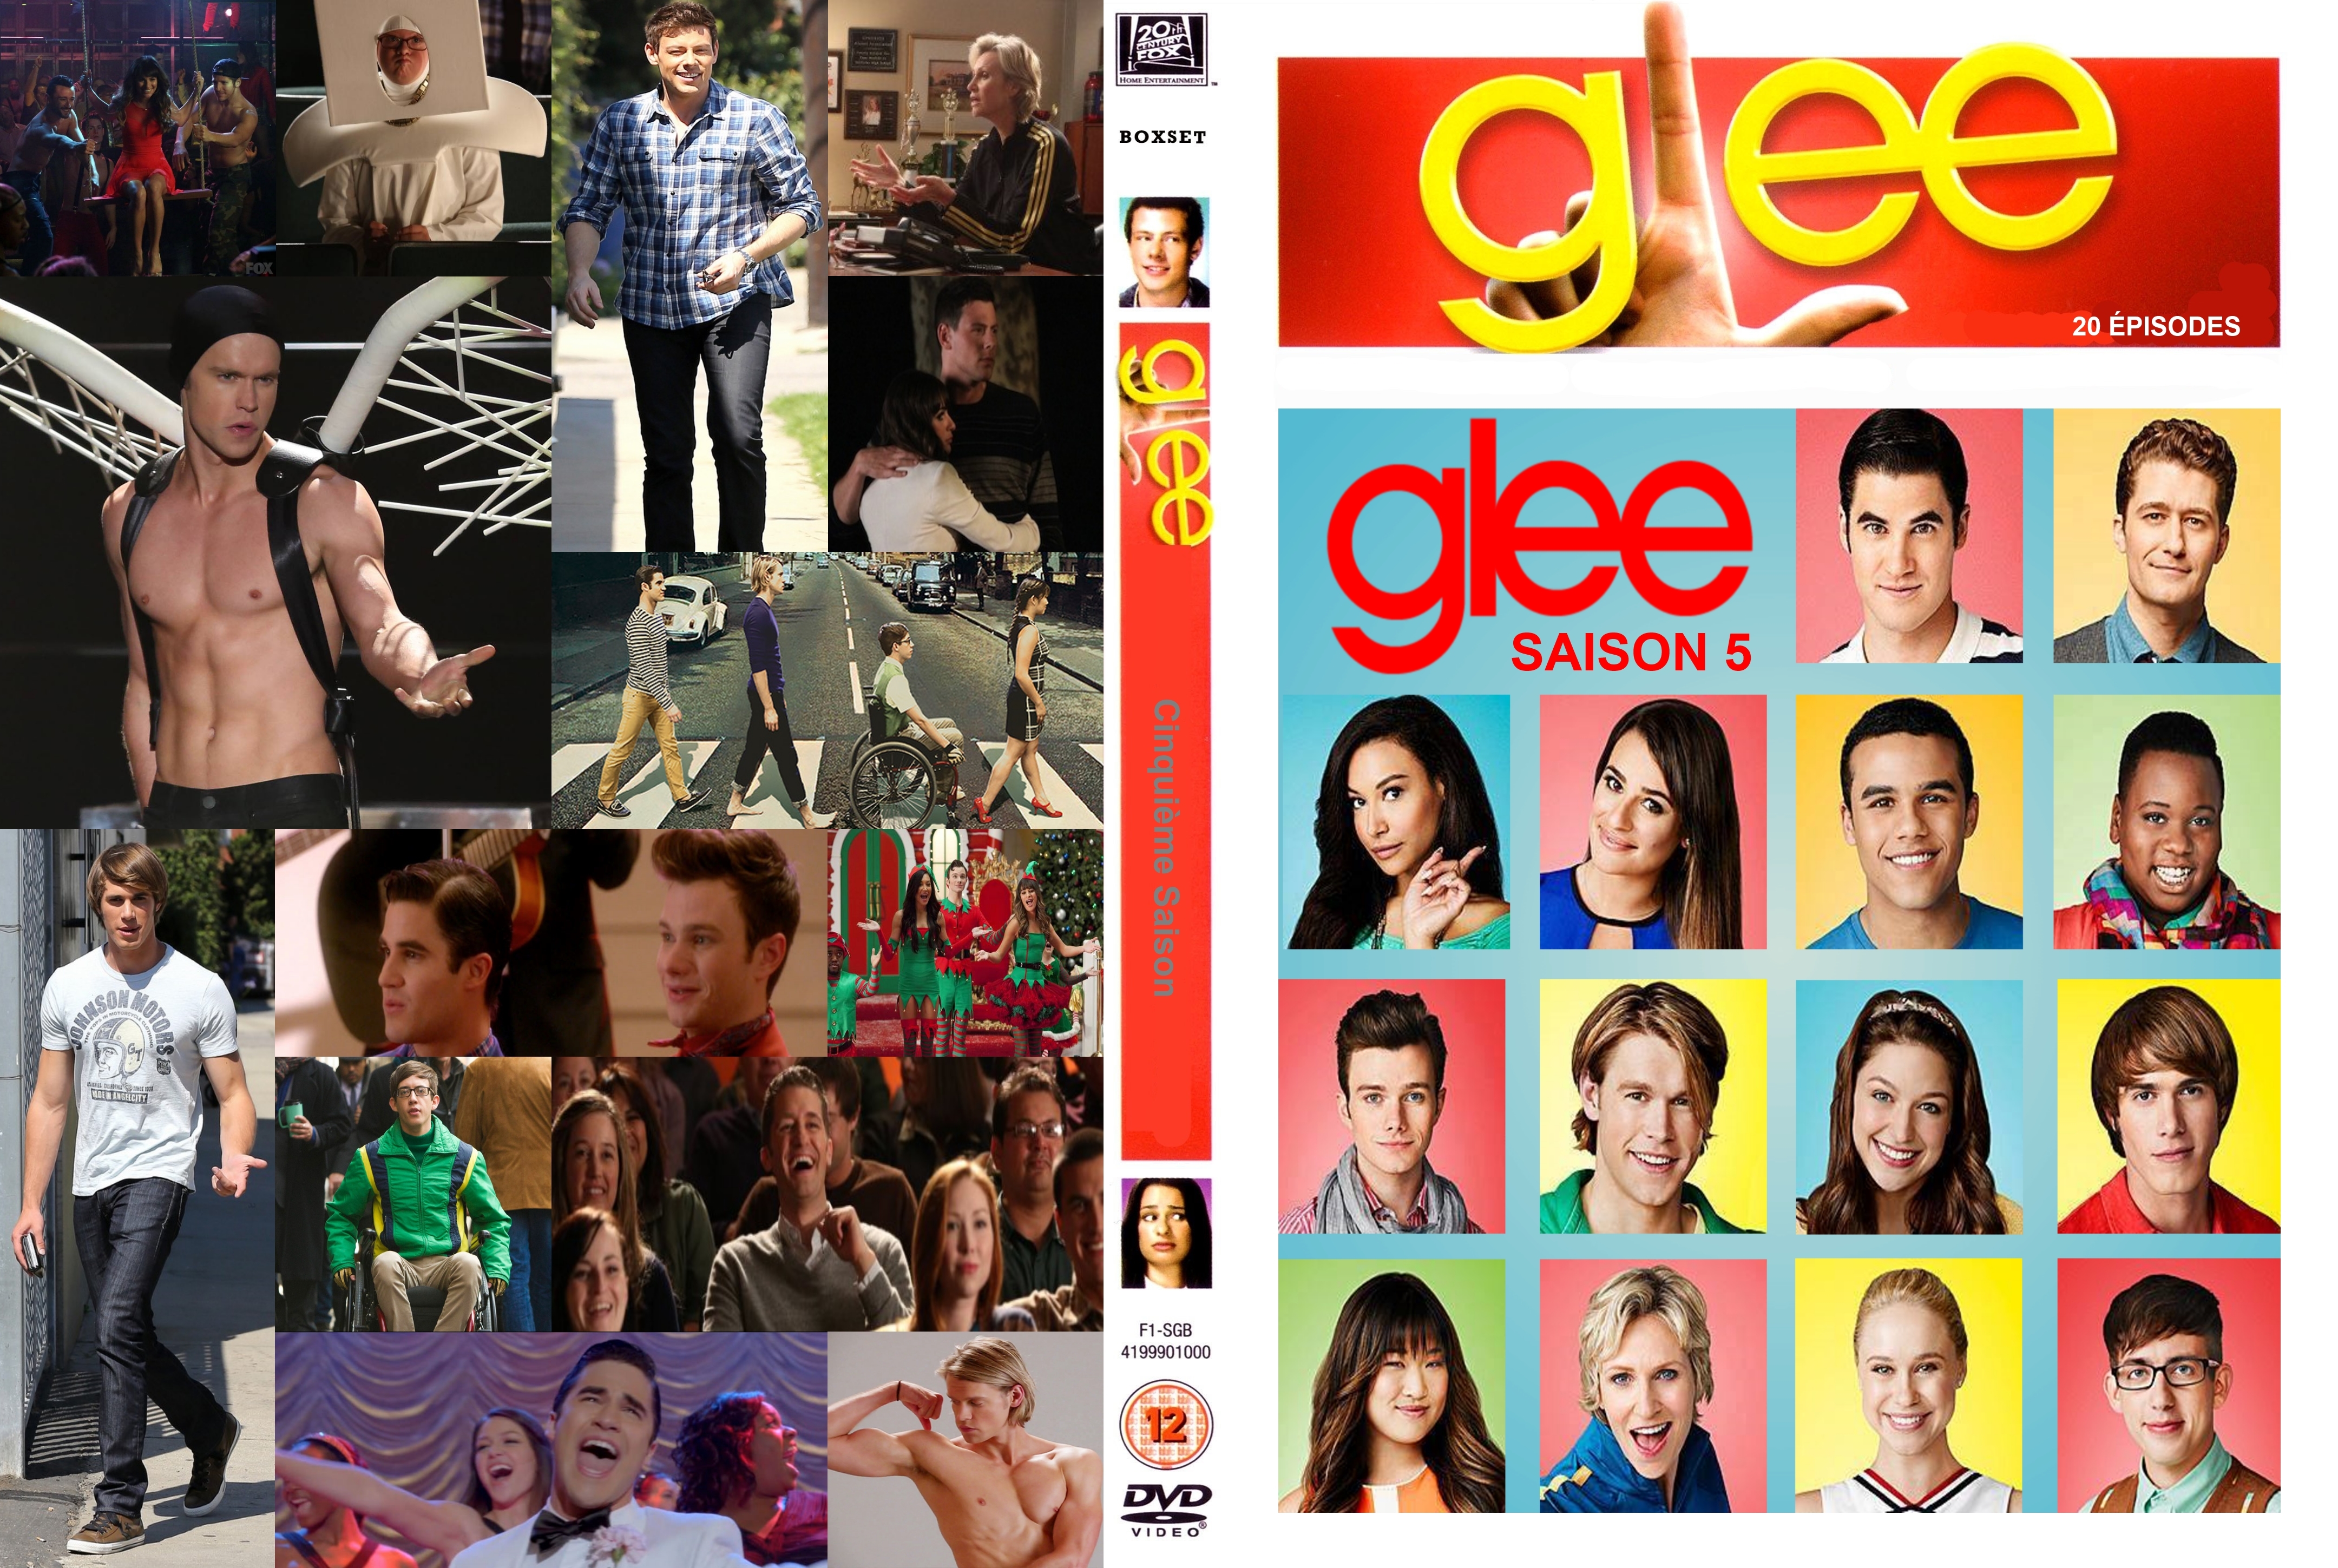 Jaquette DVD Glee saison 5 custom